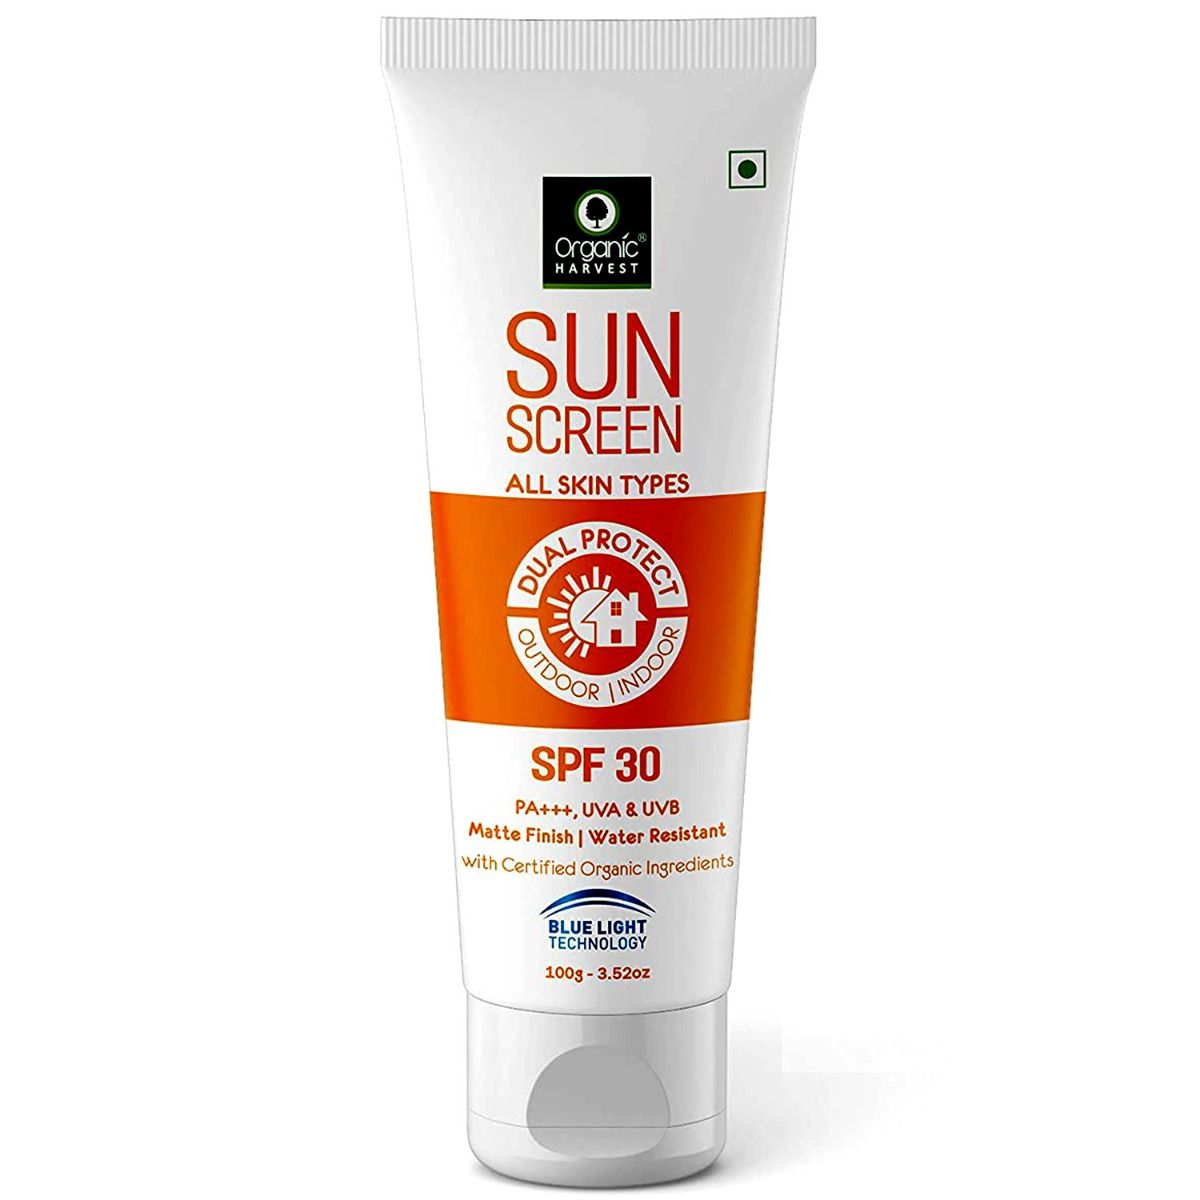 Organic Harvest Sunscreen SPF 30 PA+++ UVA & UVB, 100 gm, Pack of 1 